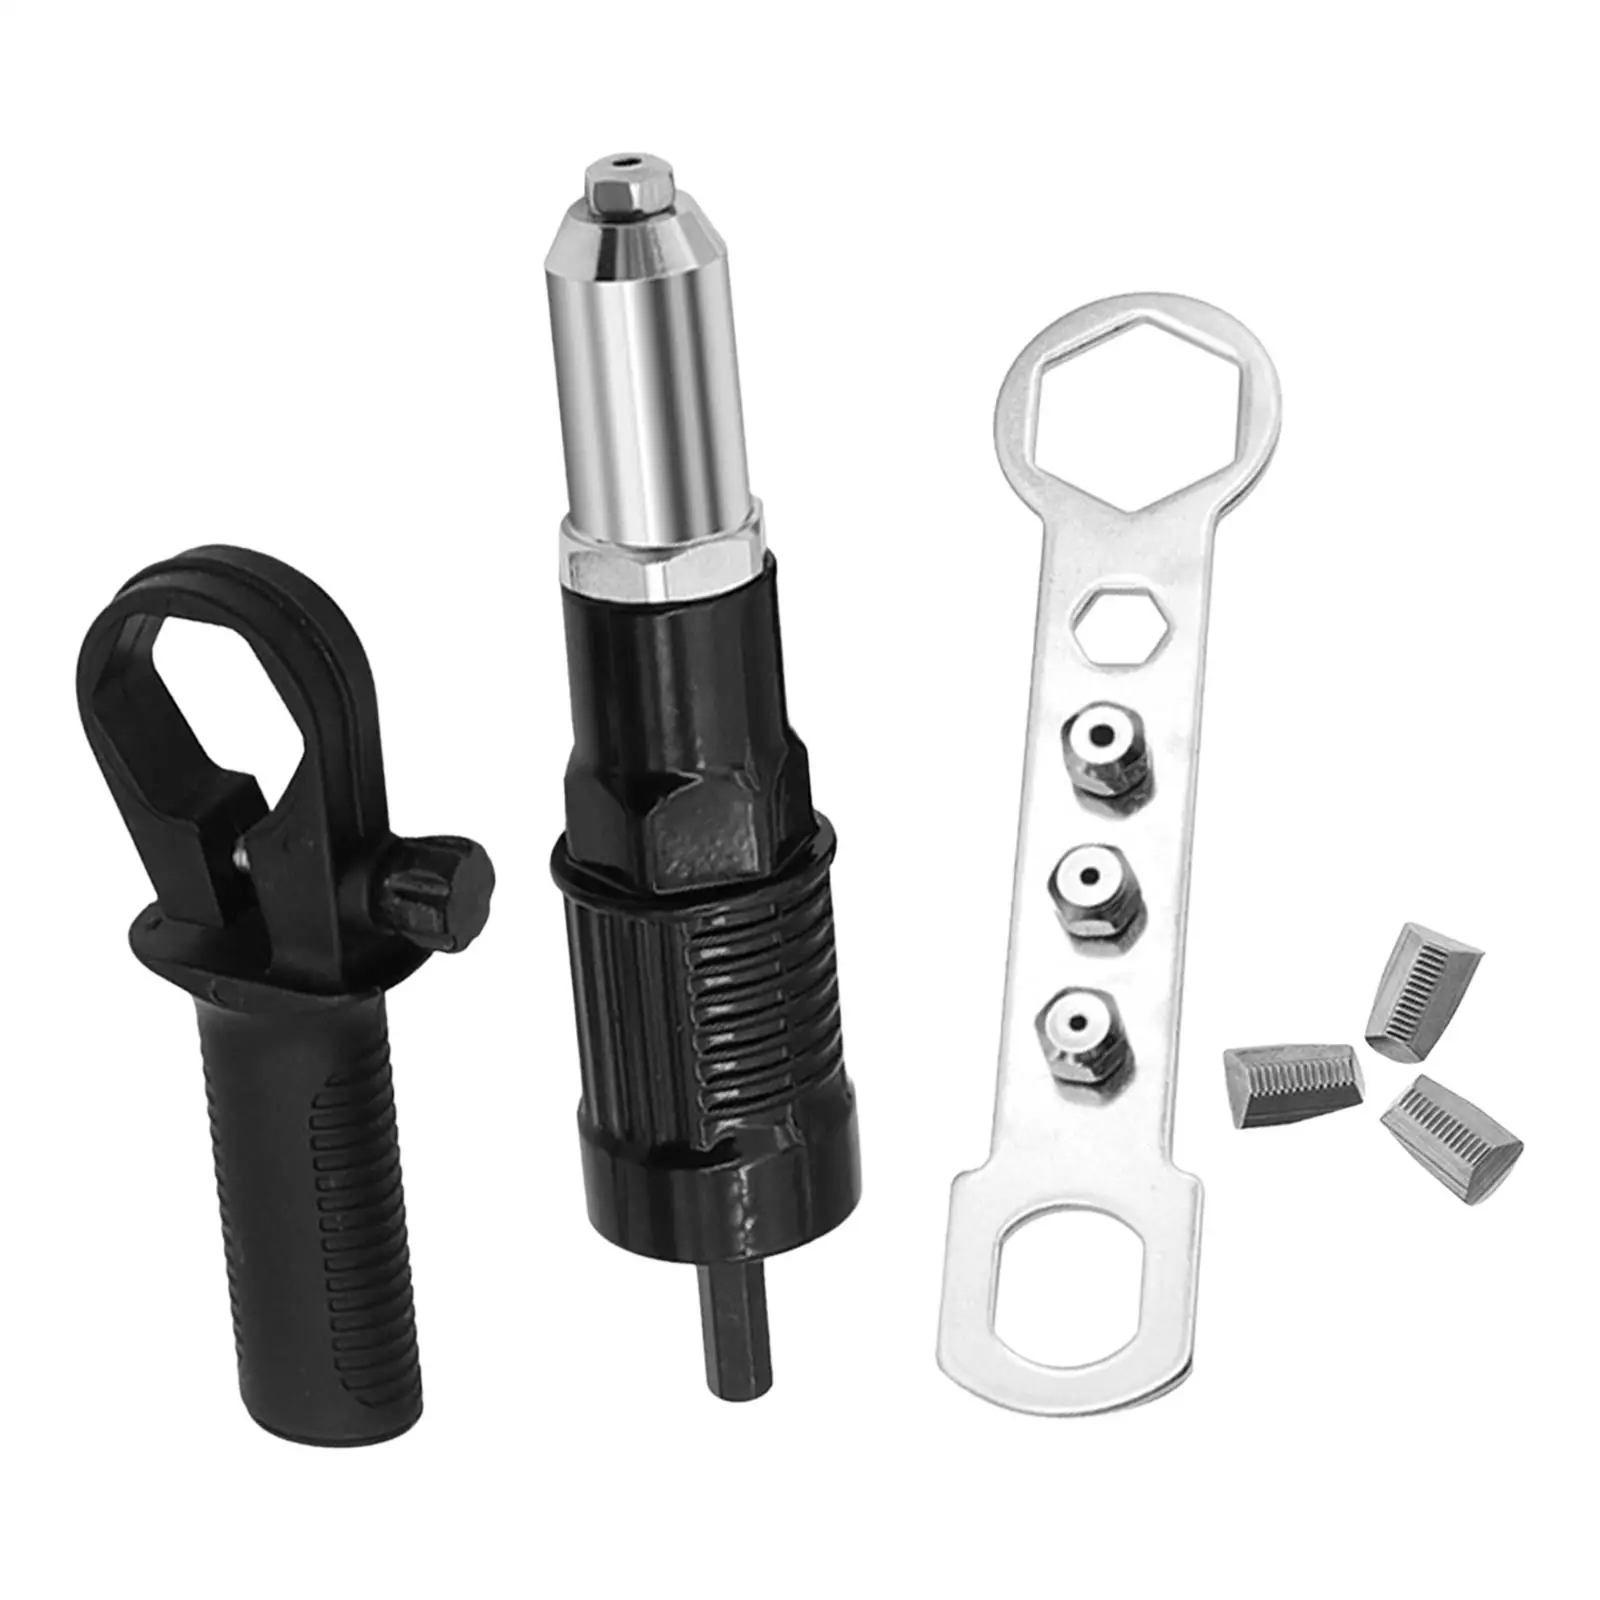 Riveting Adapter Attachments Pulling Rivet Machine Joint Cordless Drill Rivet Adapter Riveter Insert Nut Tools Rivet Connector